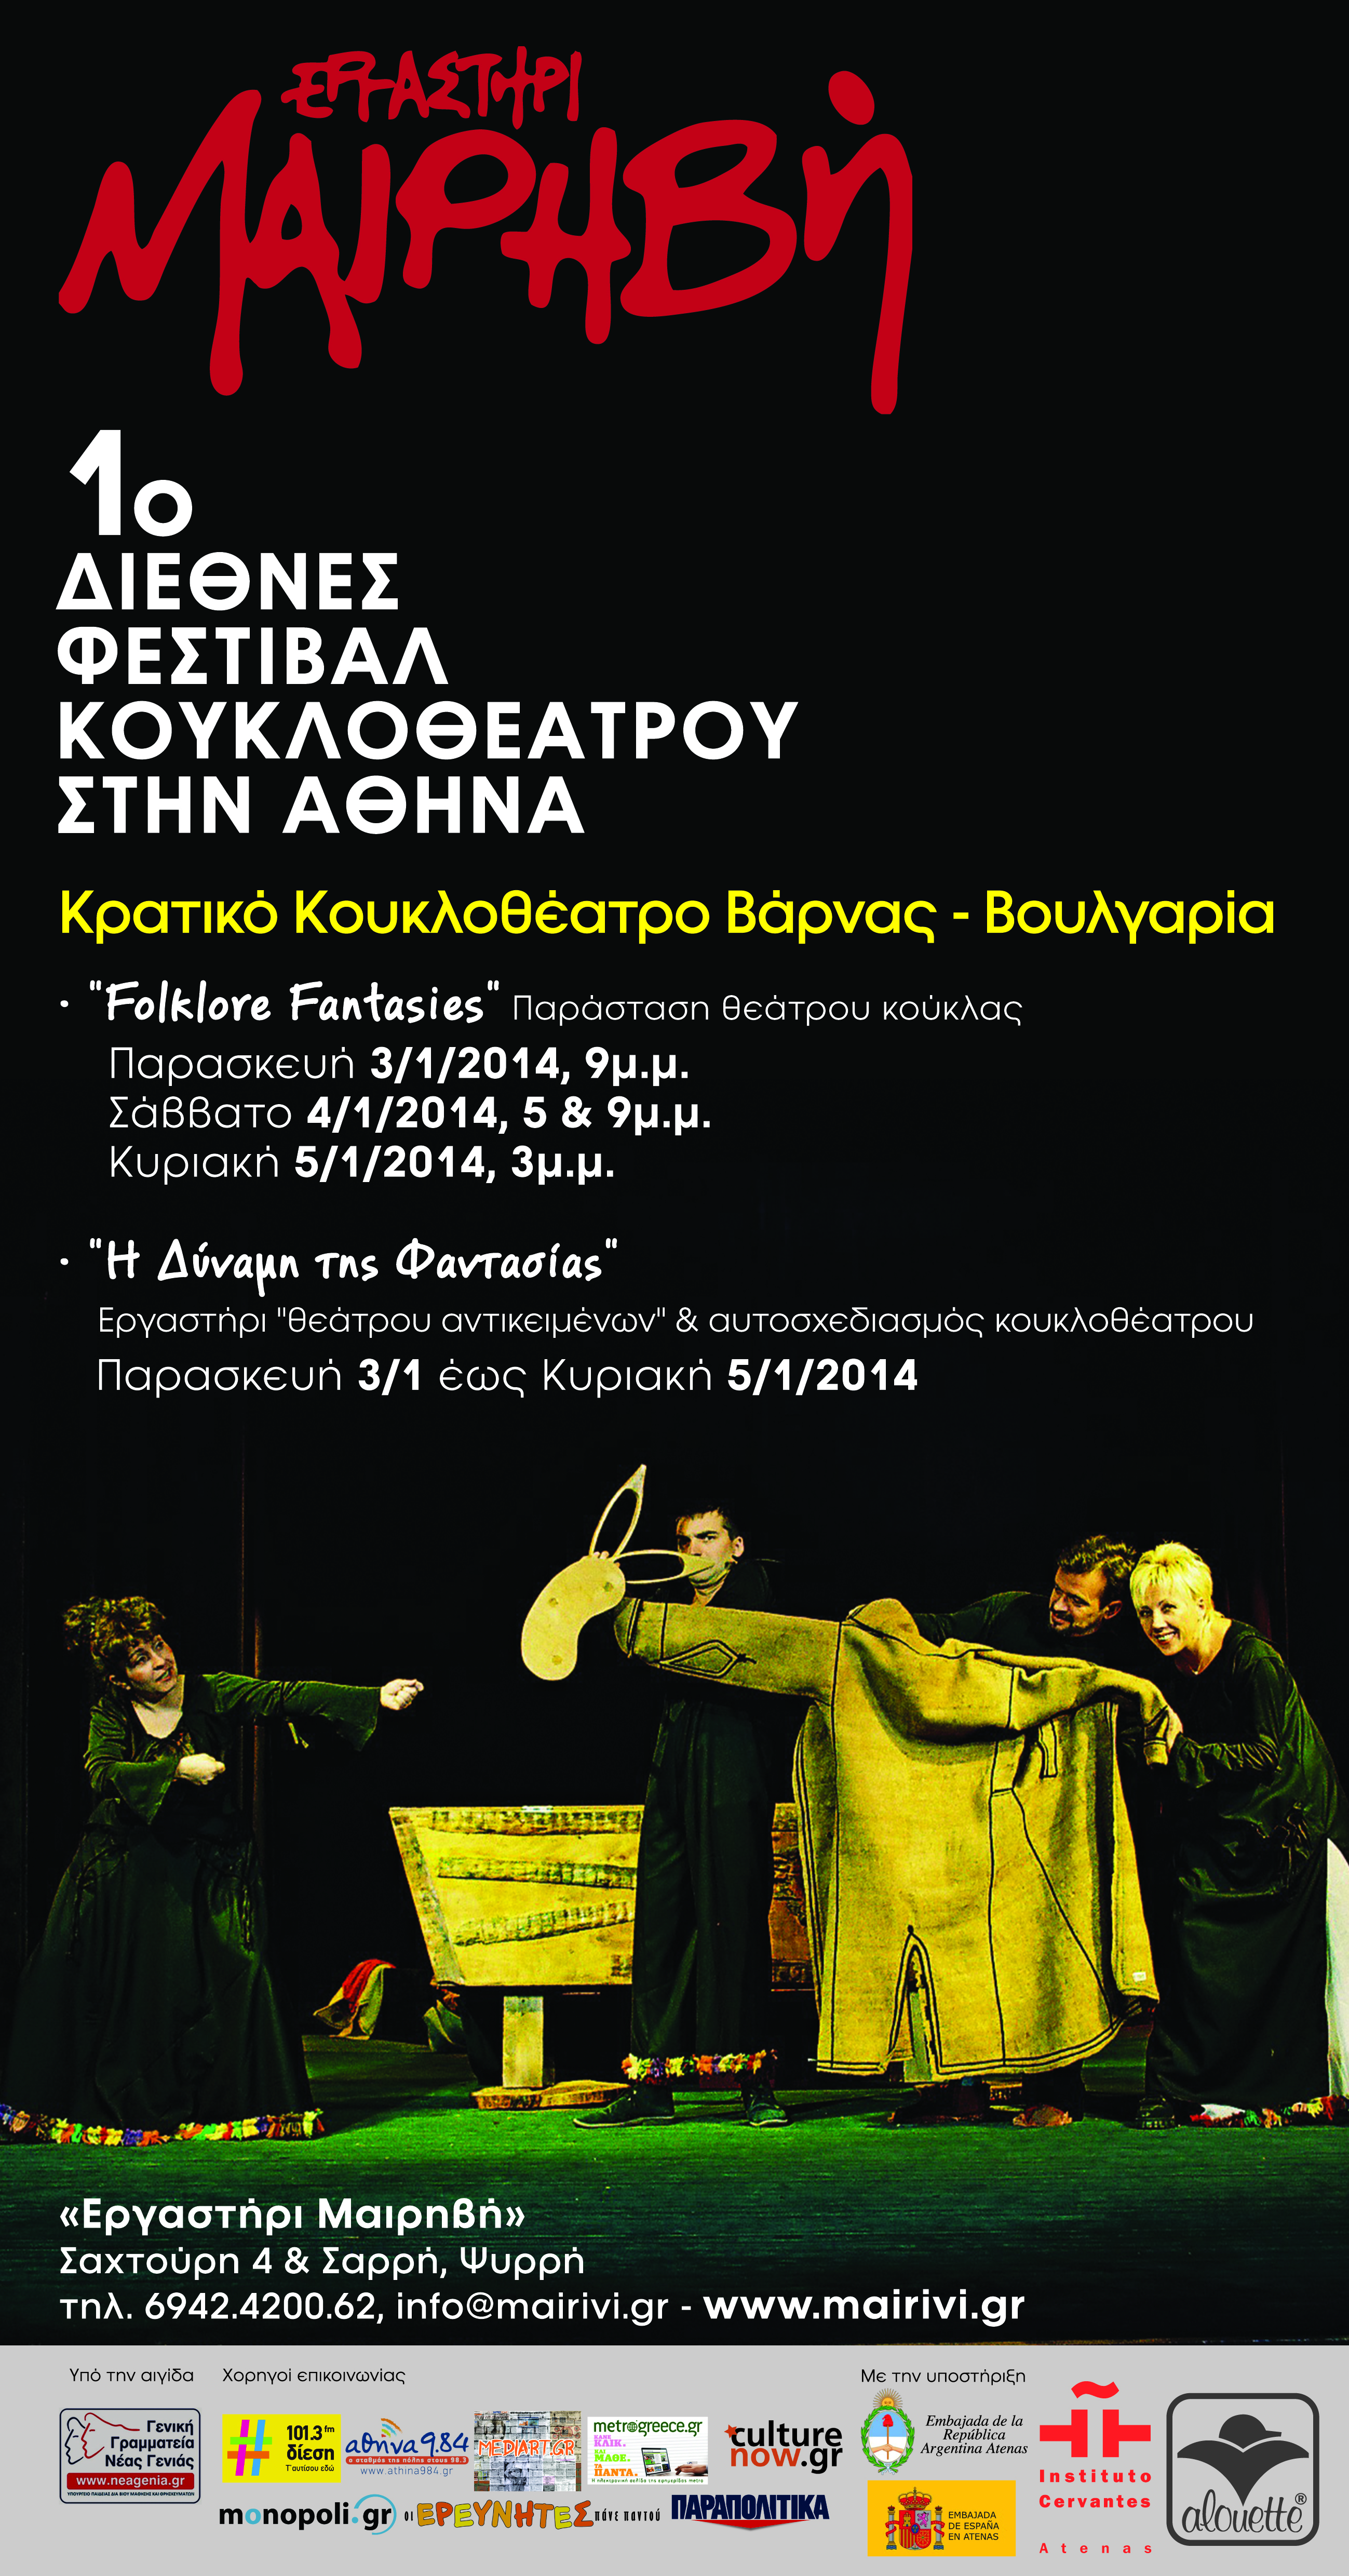 1o Ετήσιο Διεθνές Φεστιβάλ Κουκλοθέατρου και Αφήγησης στην Αθήνα